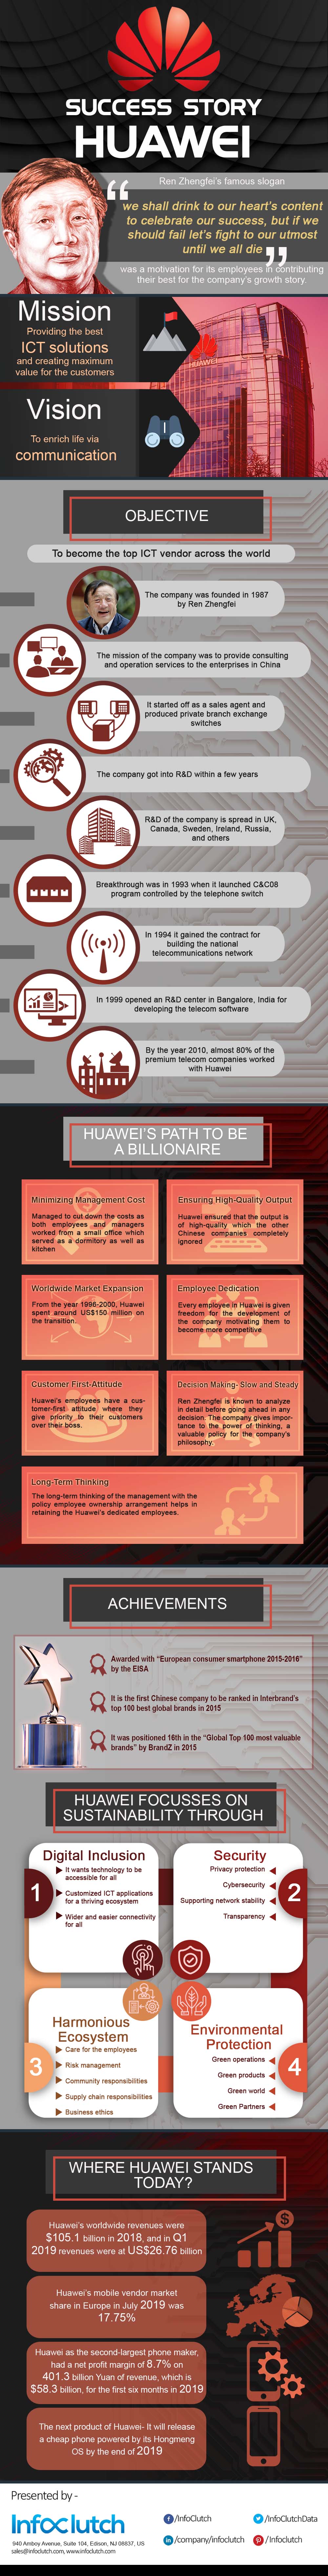 Success Story Of Huawei